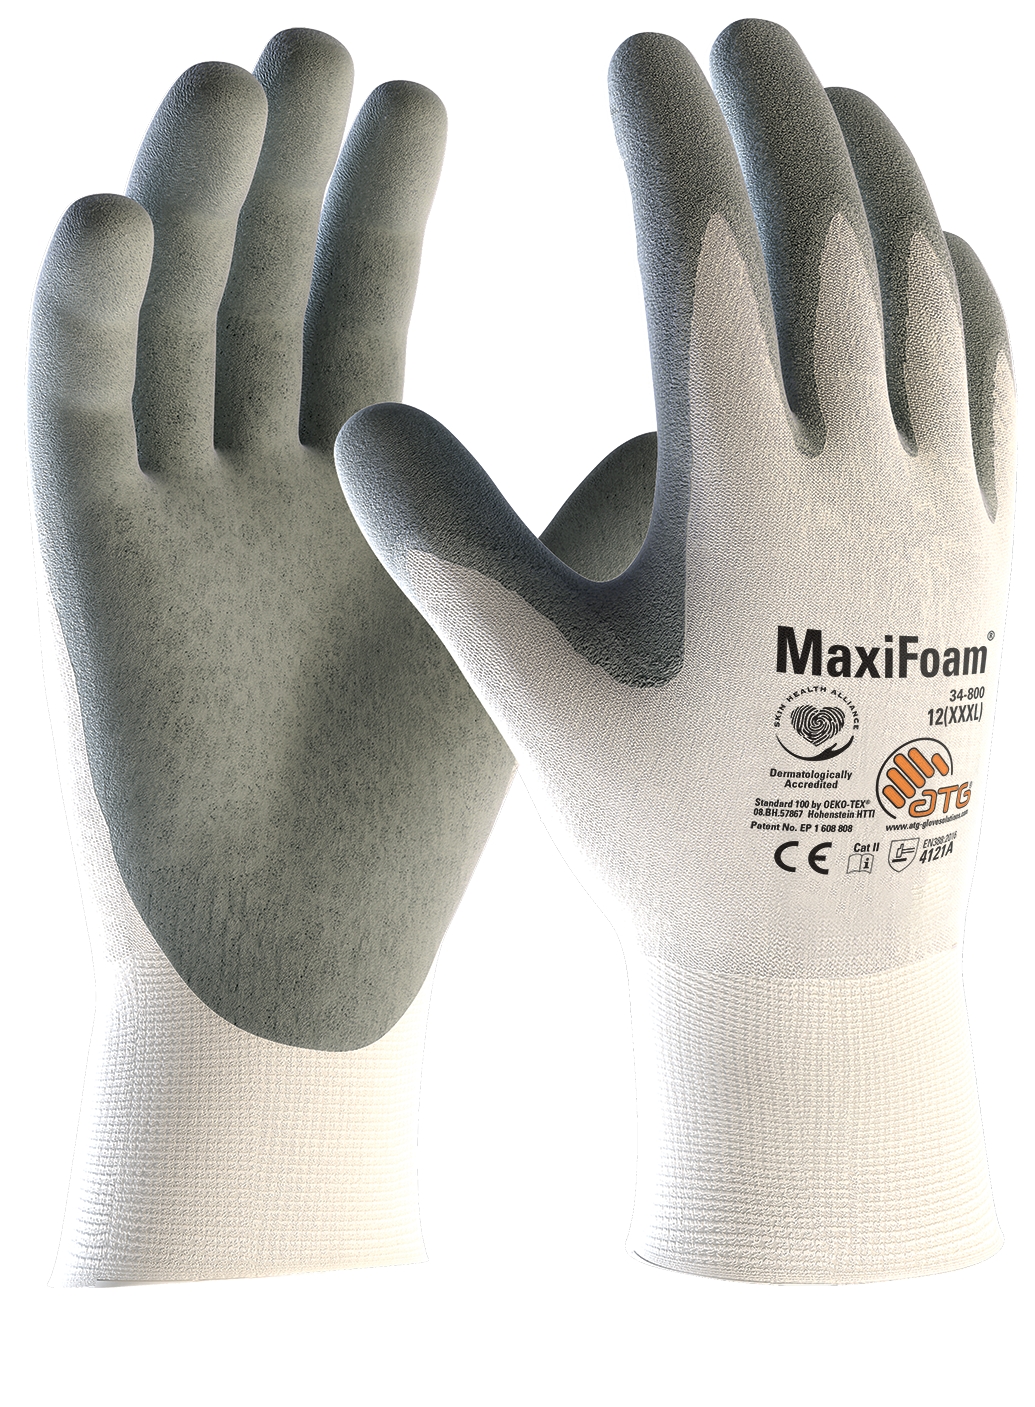 MaxiFoam® Nylon-Strickhandschuhe '(34-800)', 6 